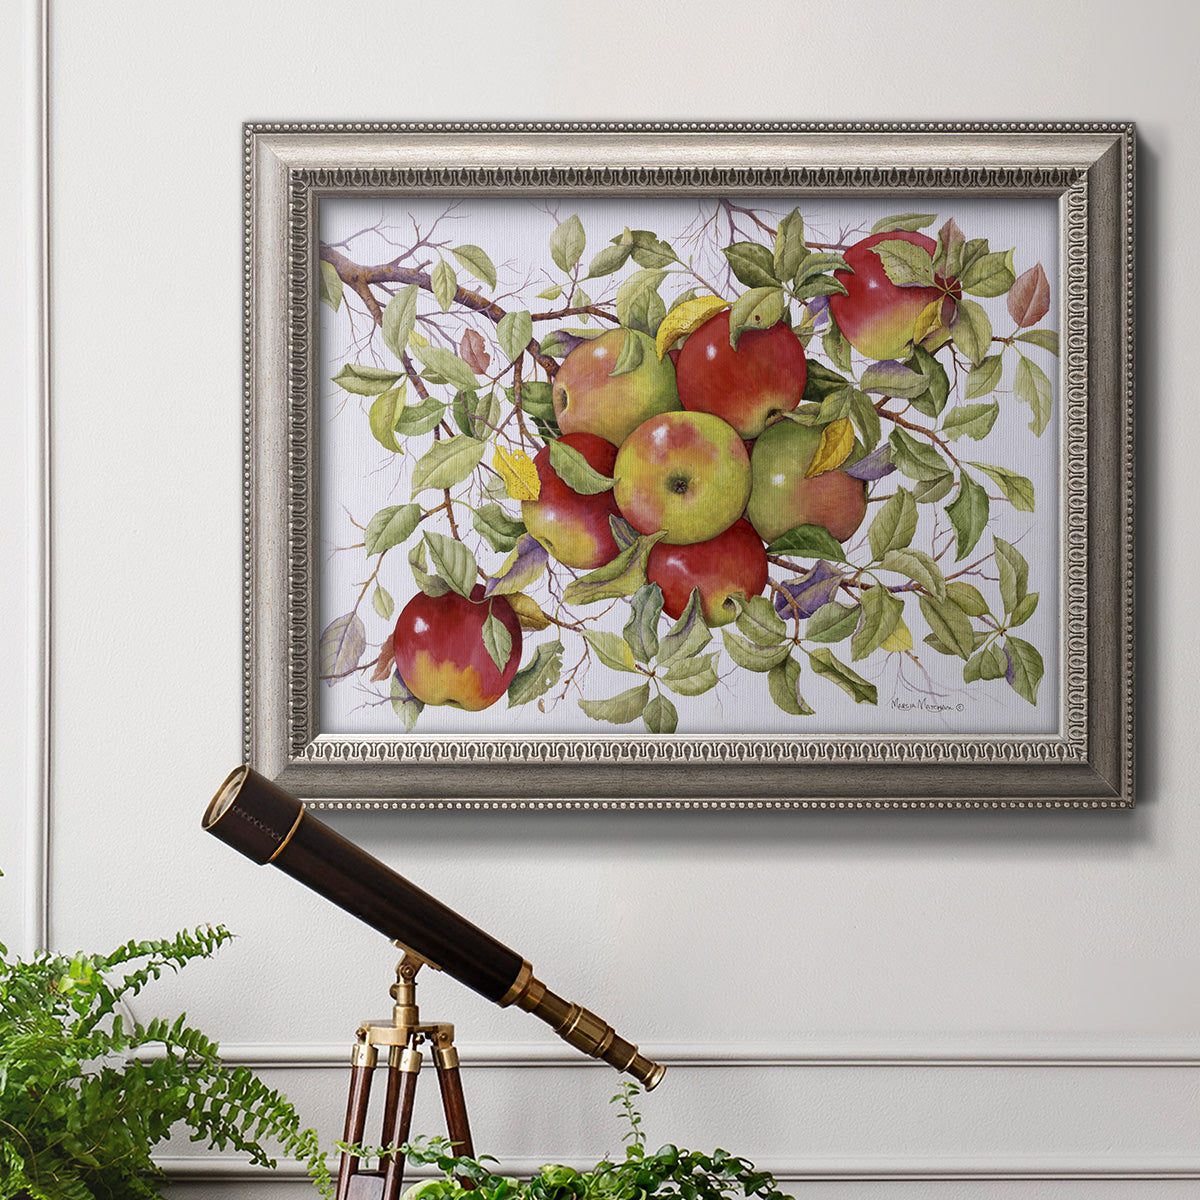 Amaryllis Splendor I Premium Framed Canvas- Ready to Hang